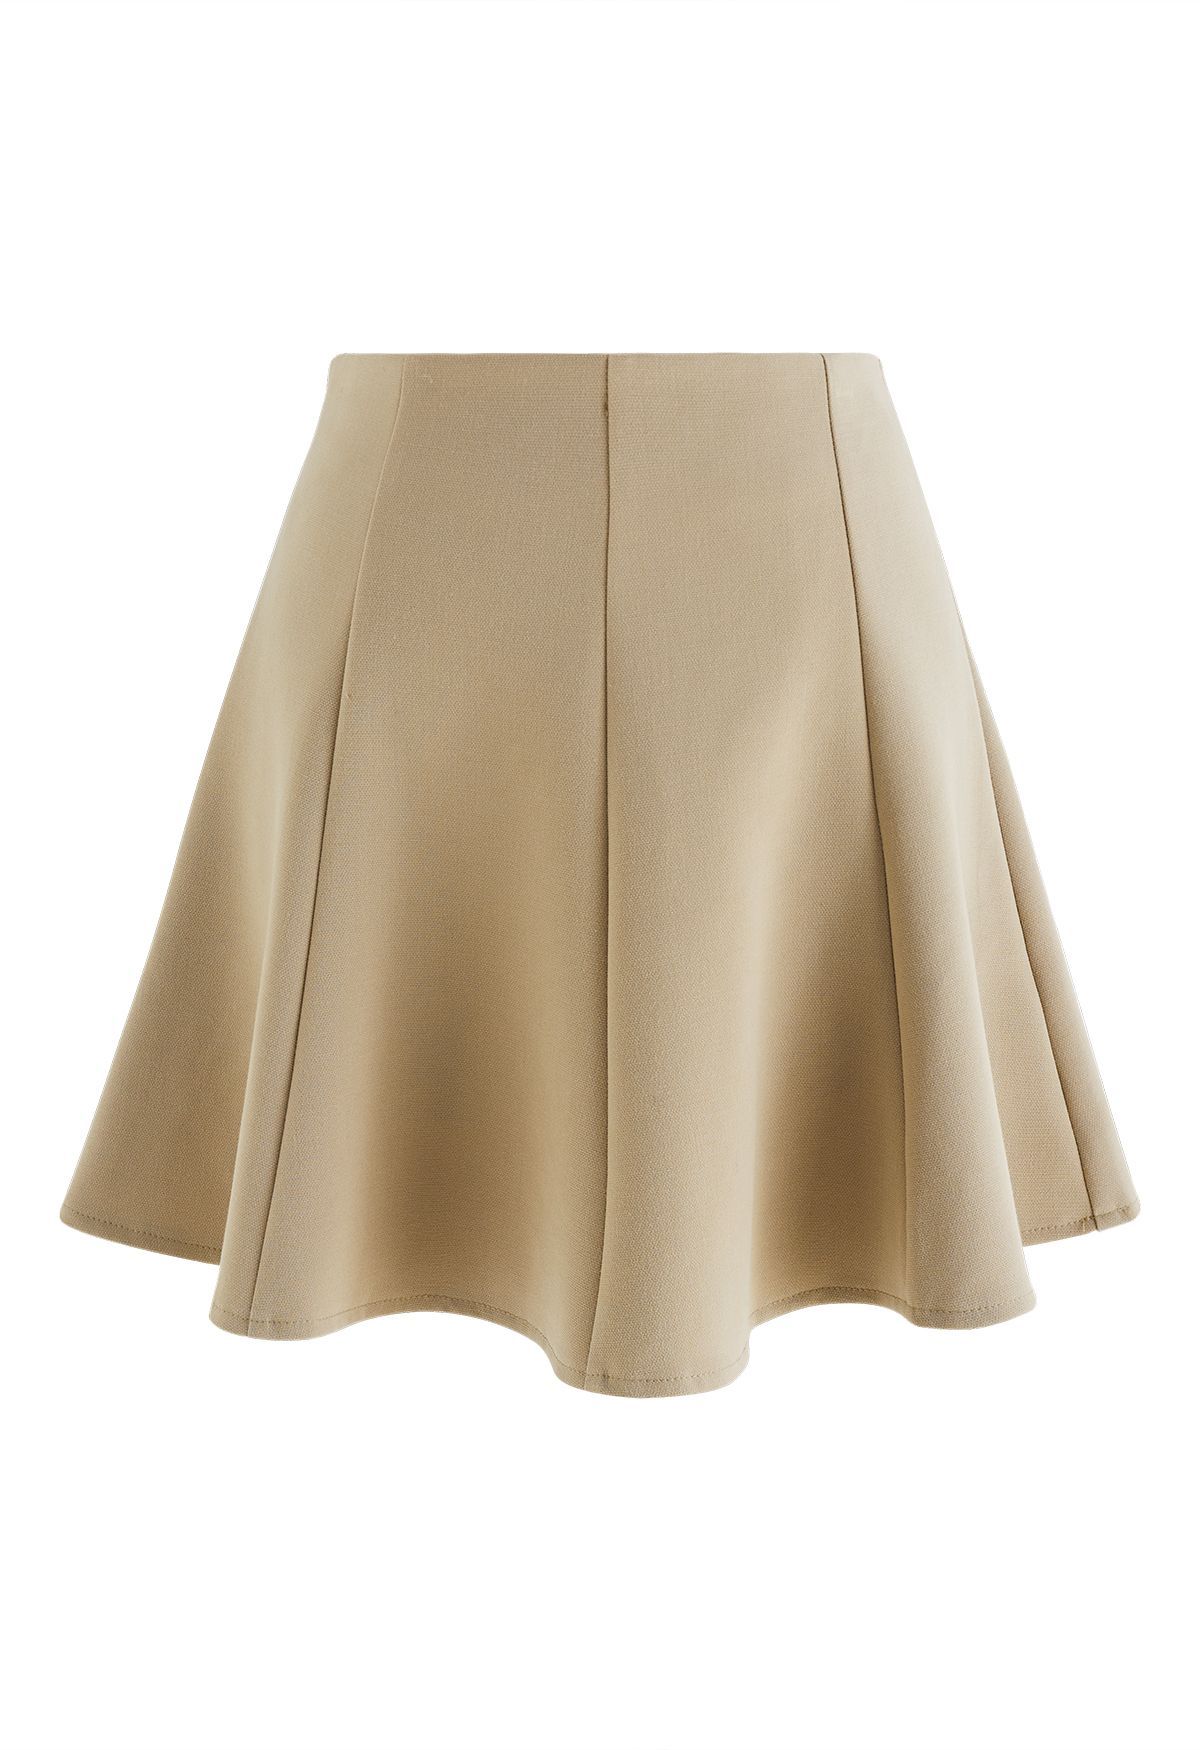 High Waist Flare Mini Skirt in Light Tan | Chicwish